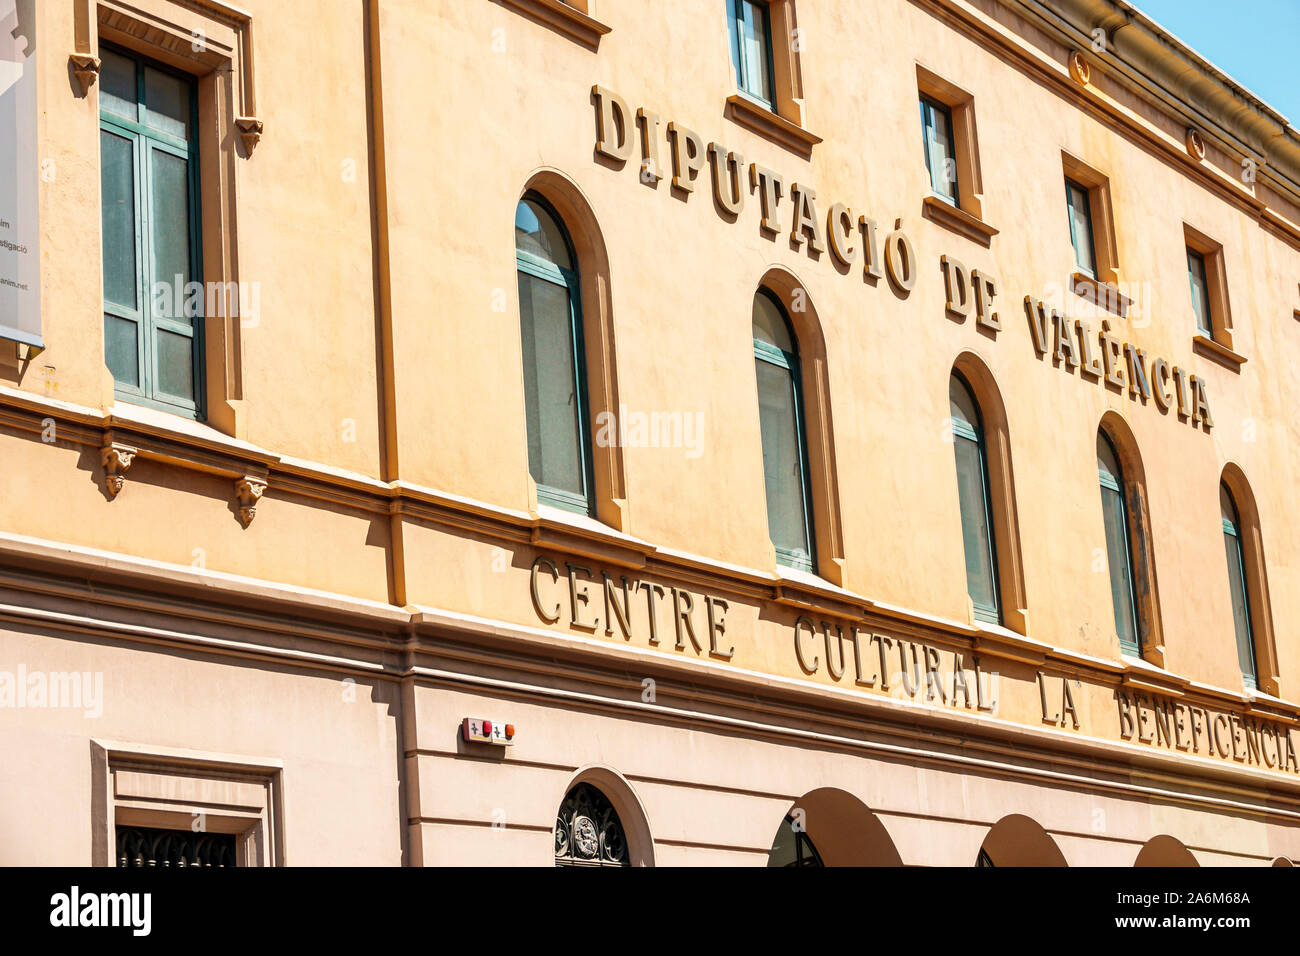 Valencia Spain,Ciutat Vella,old city,historic district,Centre Cultural La Beneficiencia,building,exterior,Prehistory & Ethnology Museums,ES190830045 Stock Photo